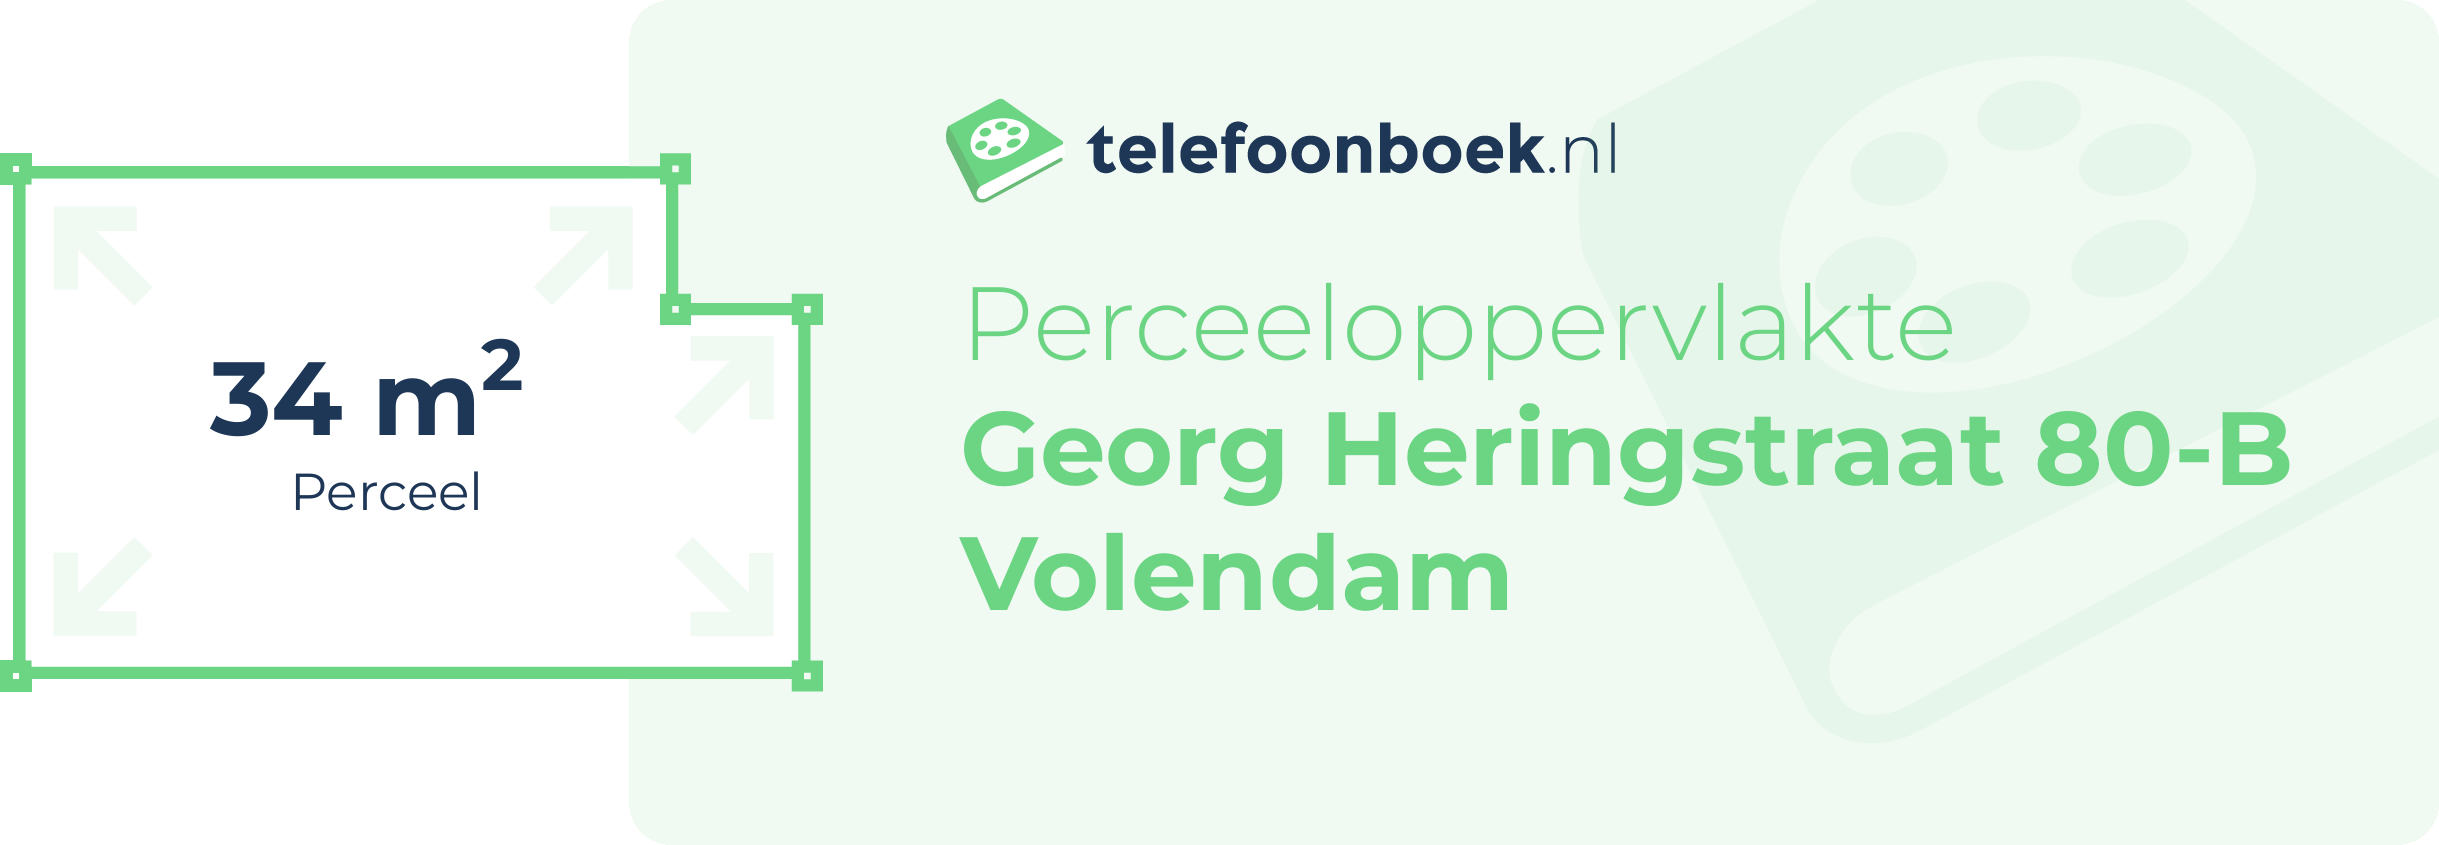 Perceeloppervlakte Georg Heringstraat 80-B Volendam